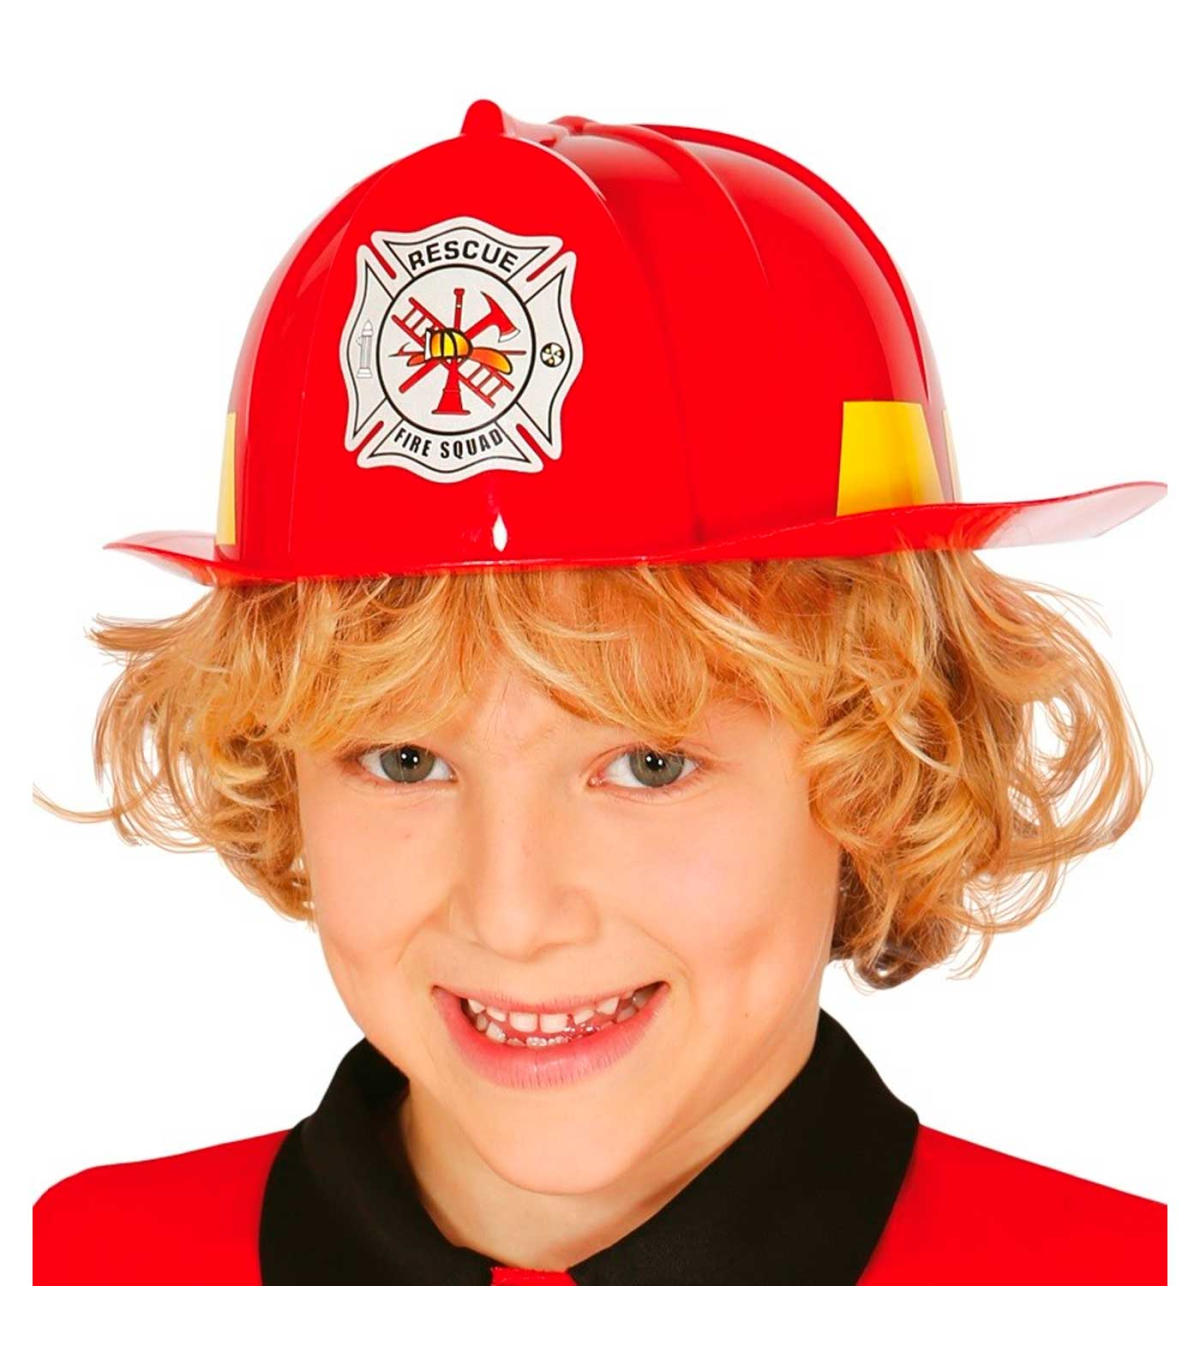  RCFINE Casco de bombero, sombrero de disfraz de bombero,  sombrero de plástico para fiesta de bombero, sombrero rojo para adultos,  sombrero para disfraz de Halloween, cosplay, recuerdo de fiesta (8  unidades) 